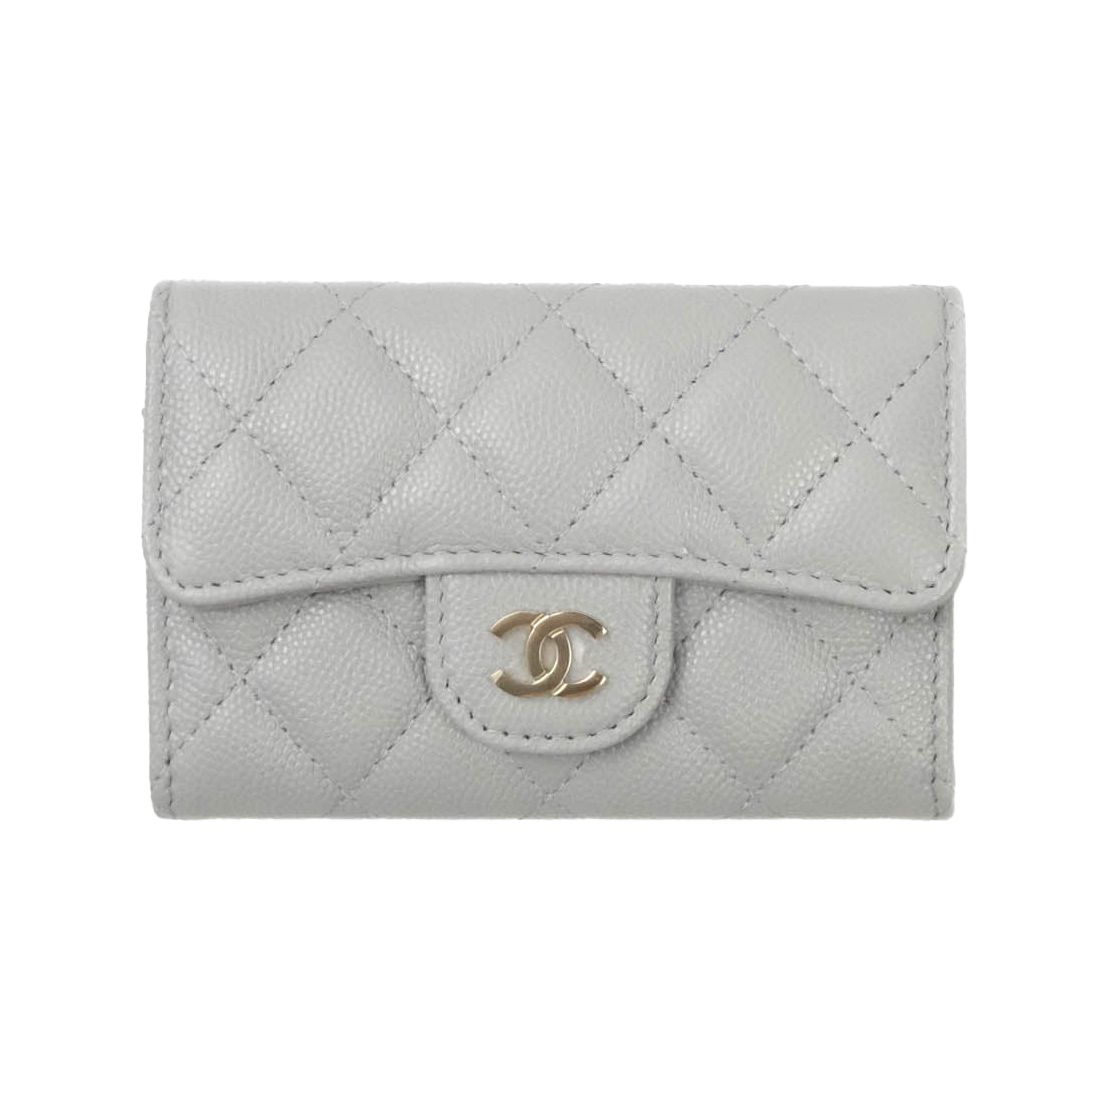 ORDER Chanel wallet  Ví Chanel ngắn màu hồng